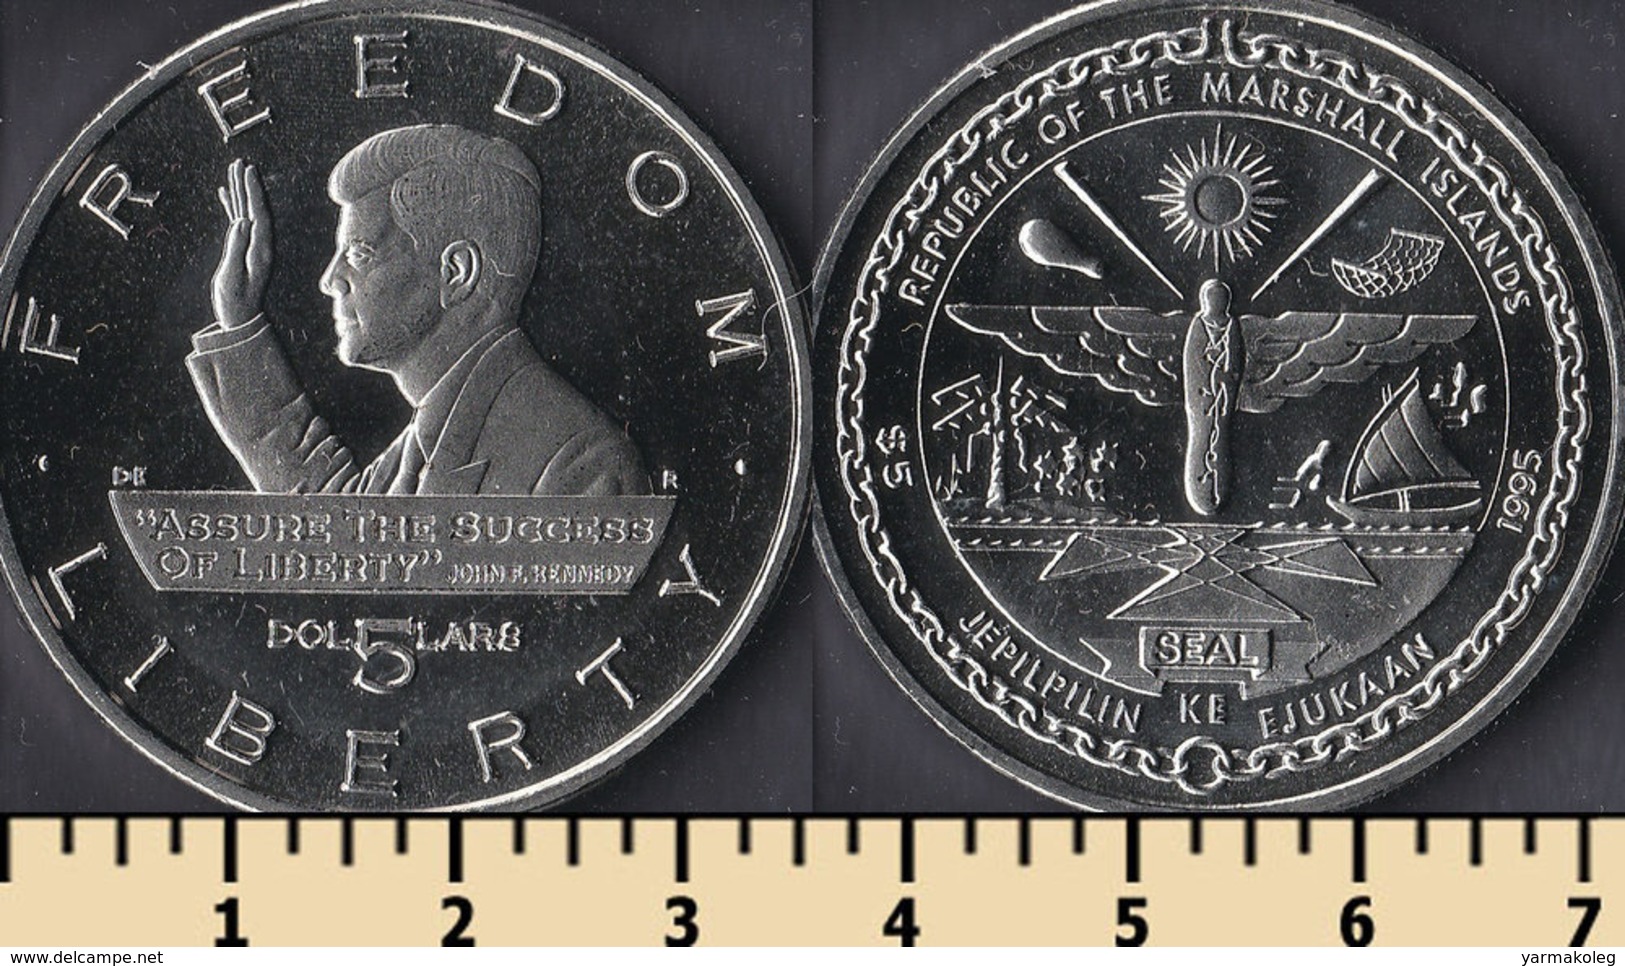 Marshall Islands 5 Dollars 1995 - Marshall Islands